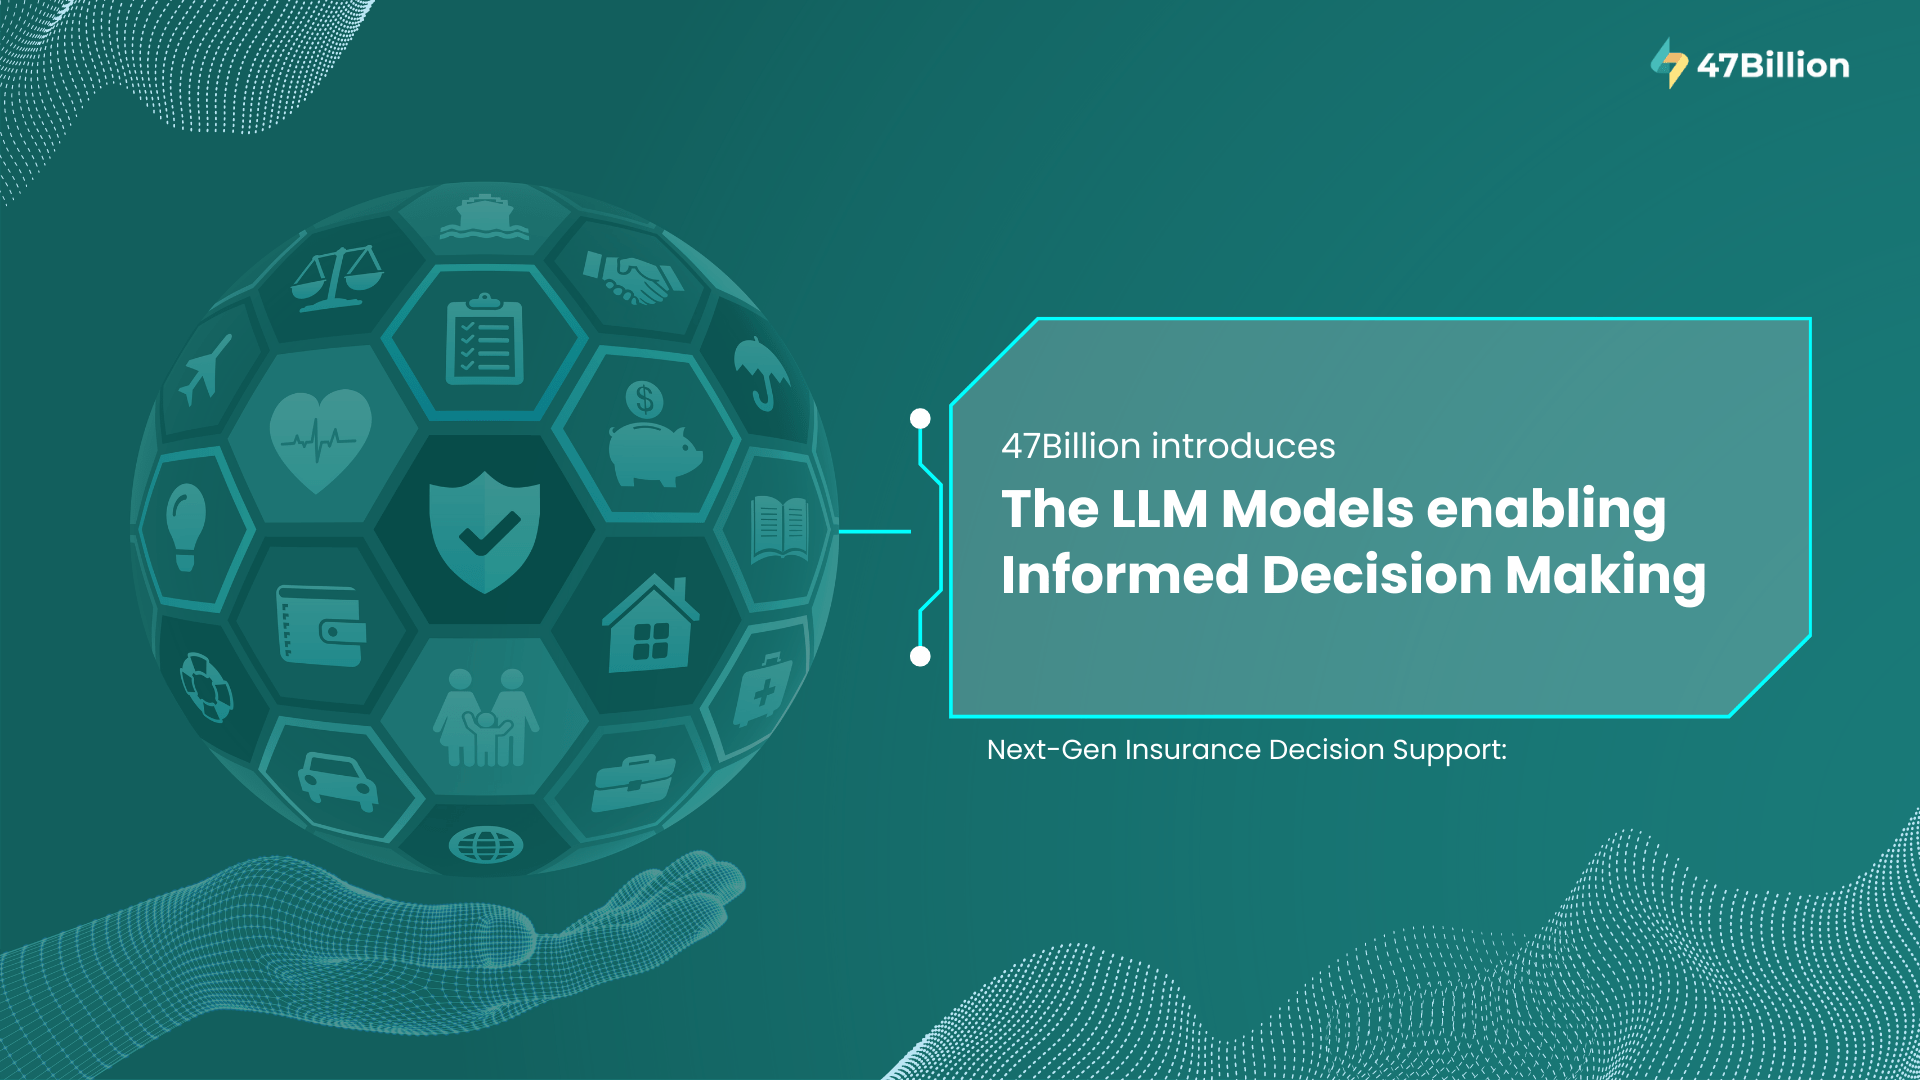 Next-Gen Insurance Decision Support: 47Billion introduces the LLM Models enabling Informed Decision Making